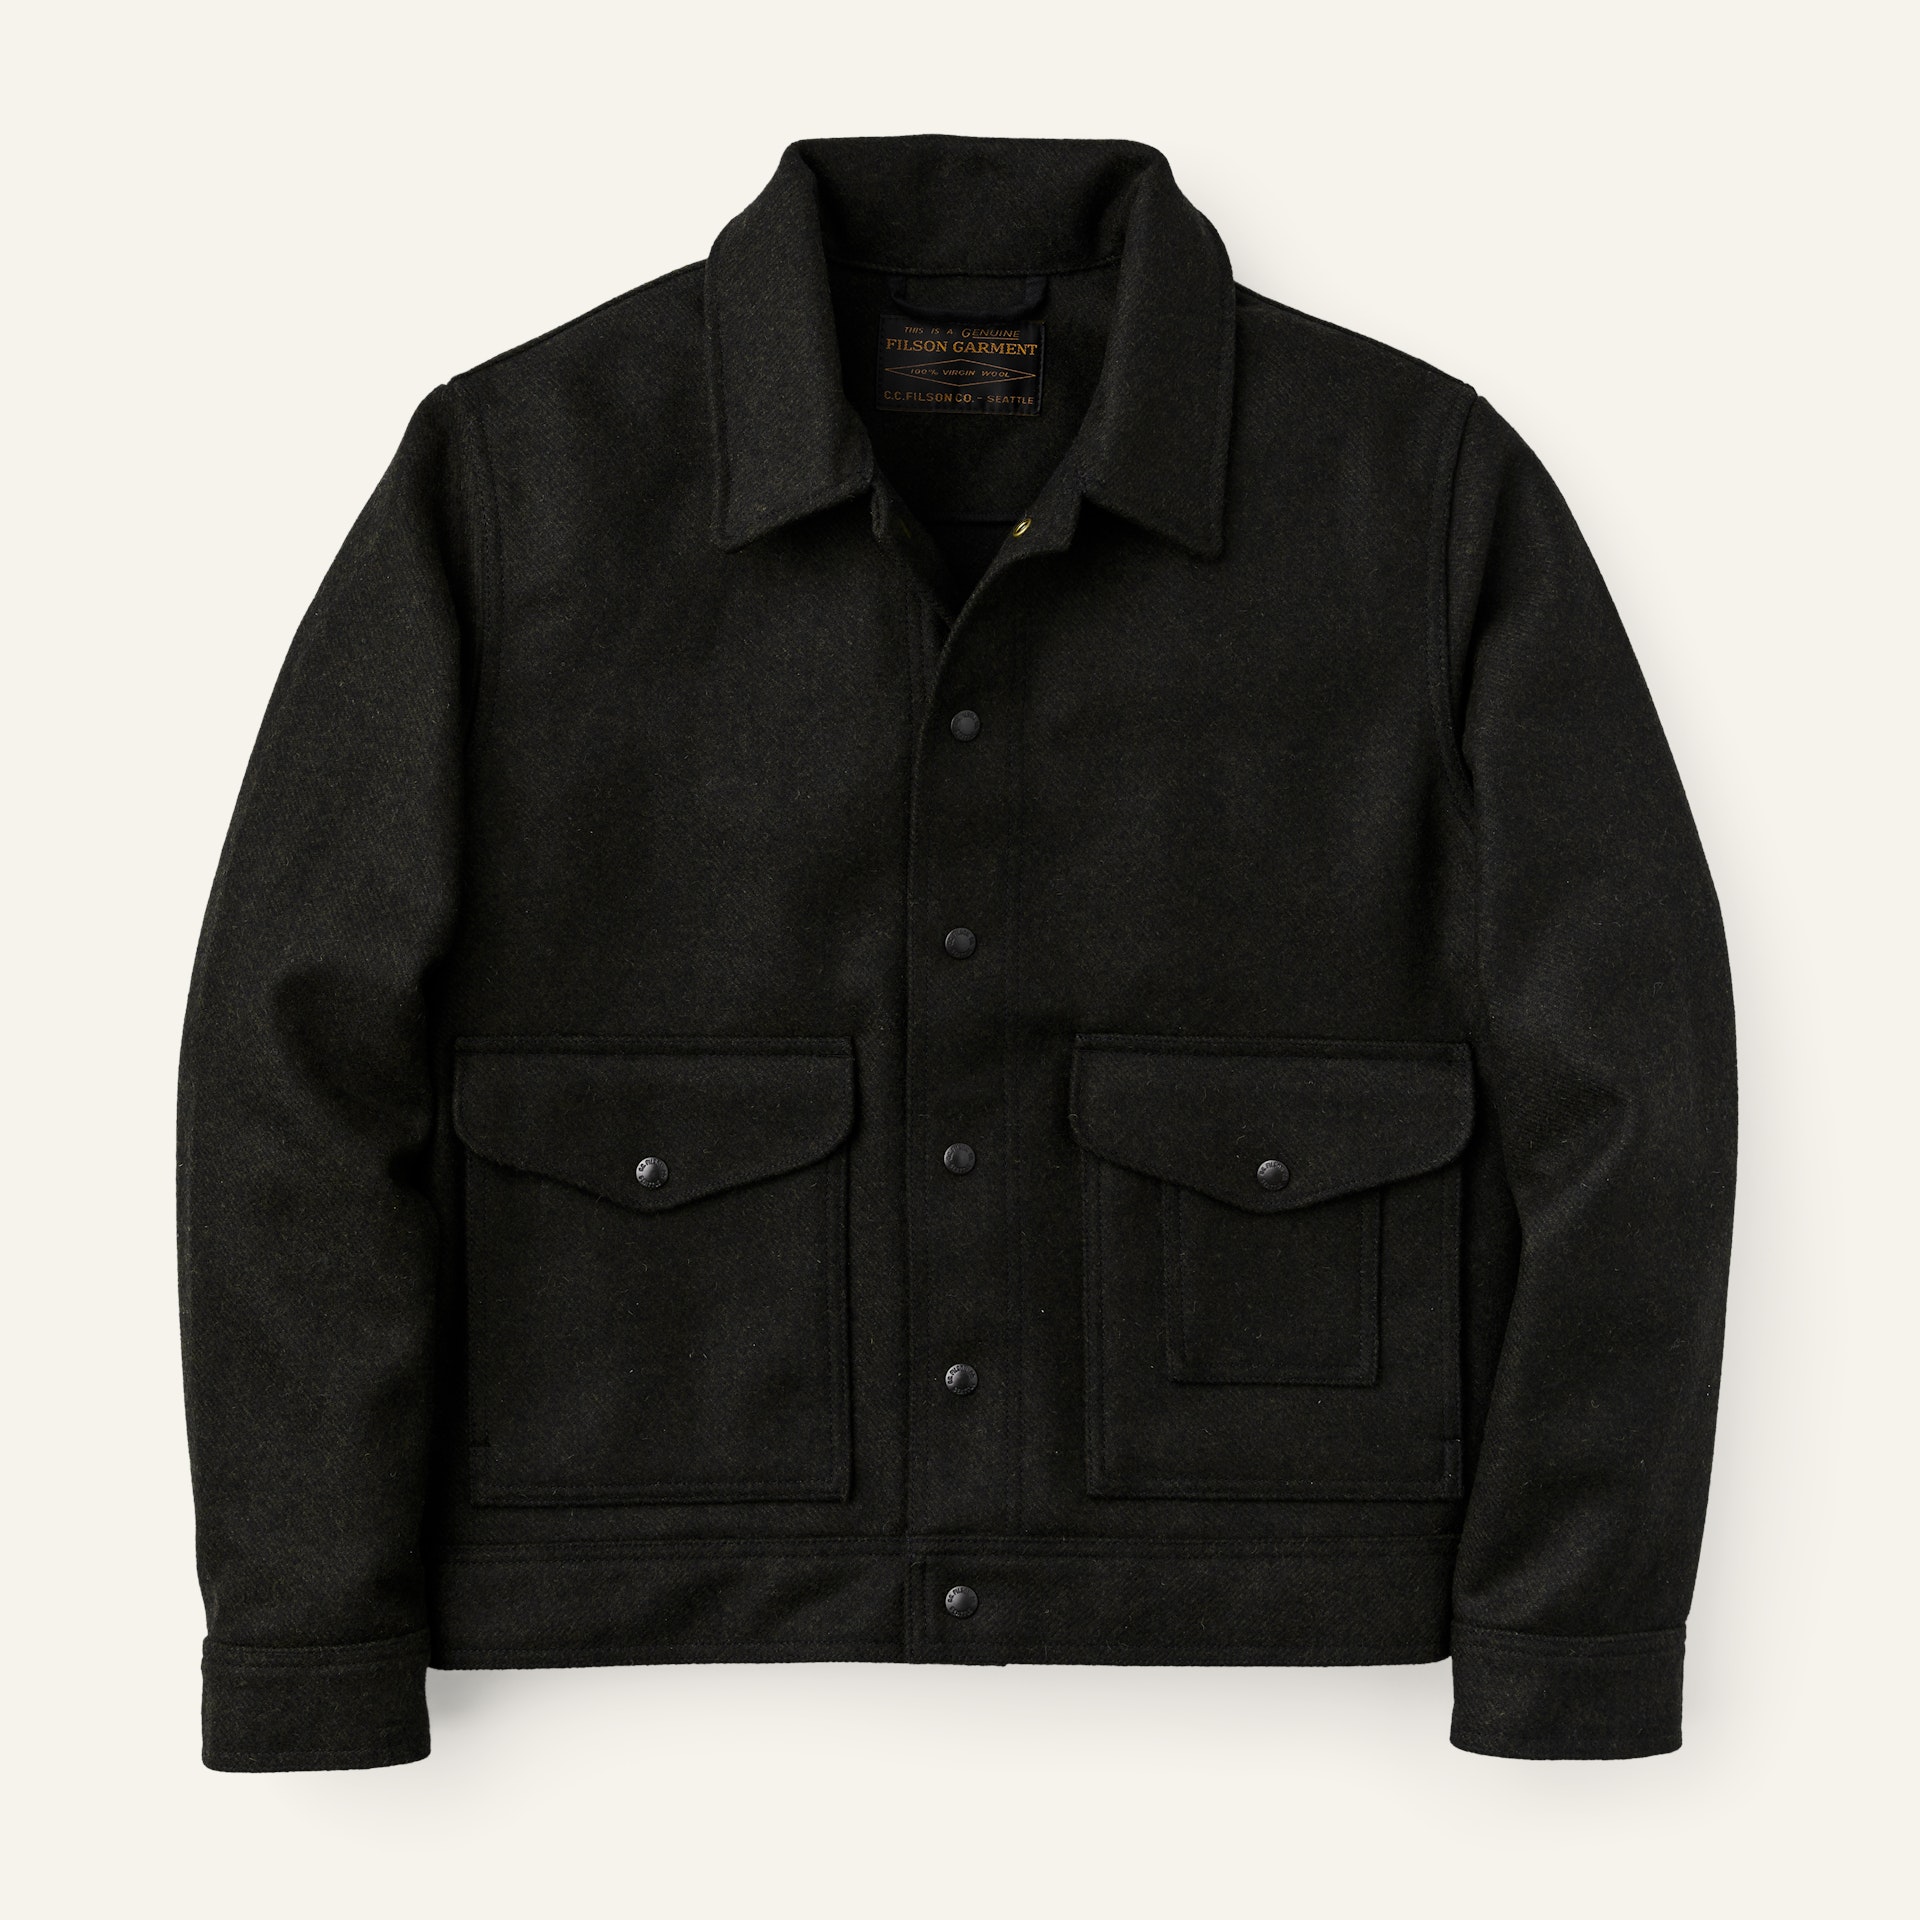 1930s Men’s Clothing & Fashion History Mackinaw Wool Work Jacket $455.00 AT vintagedancer.com